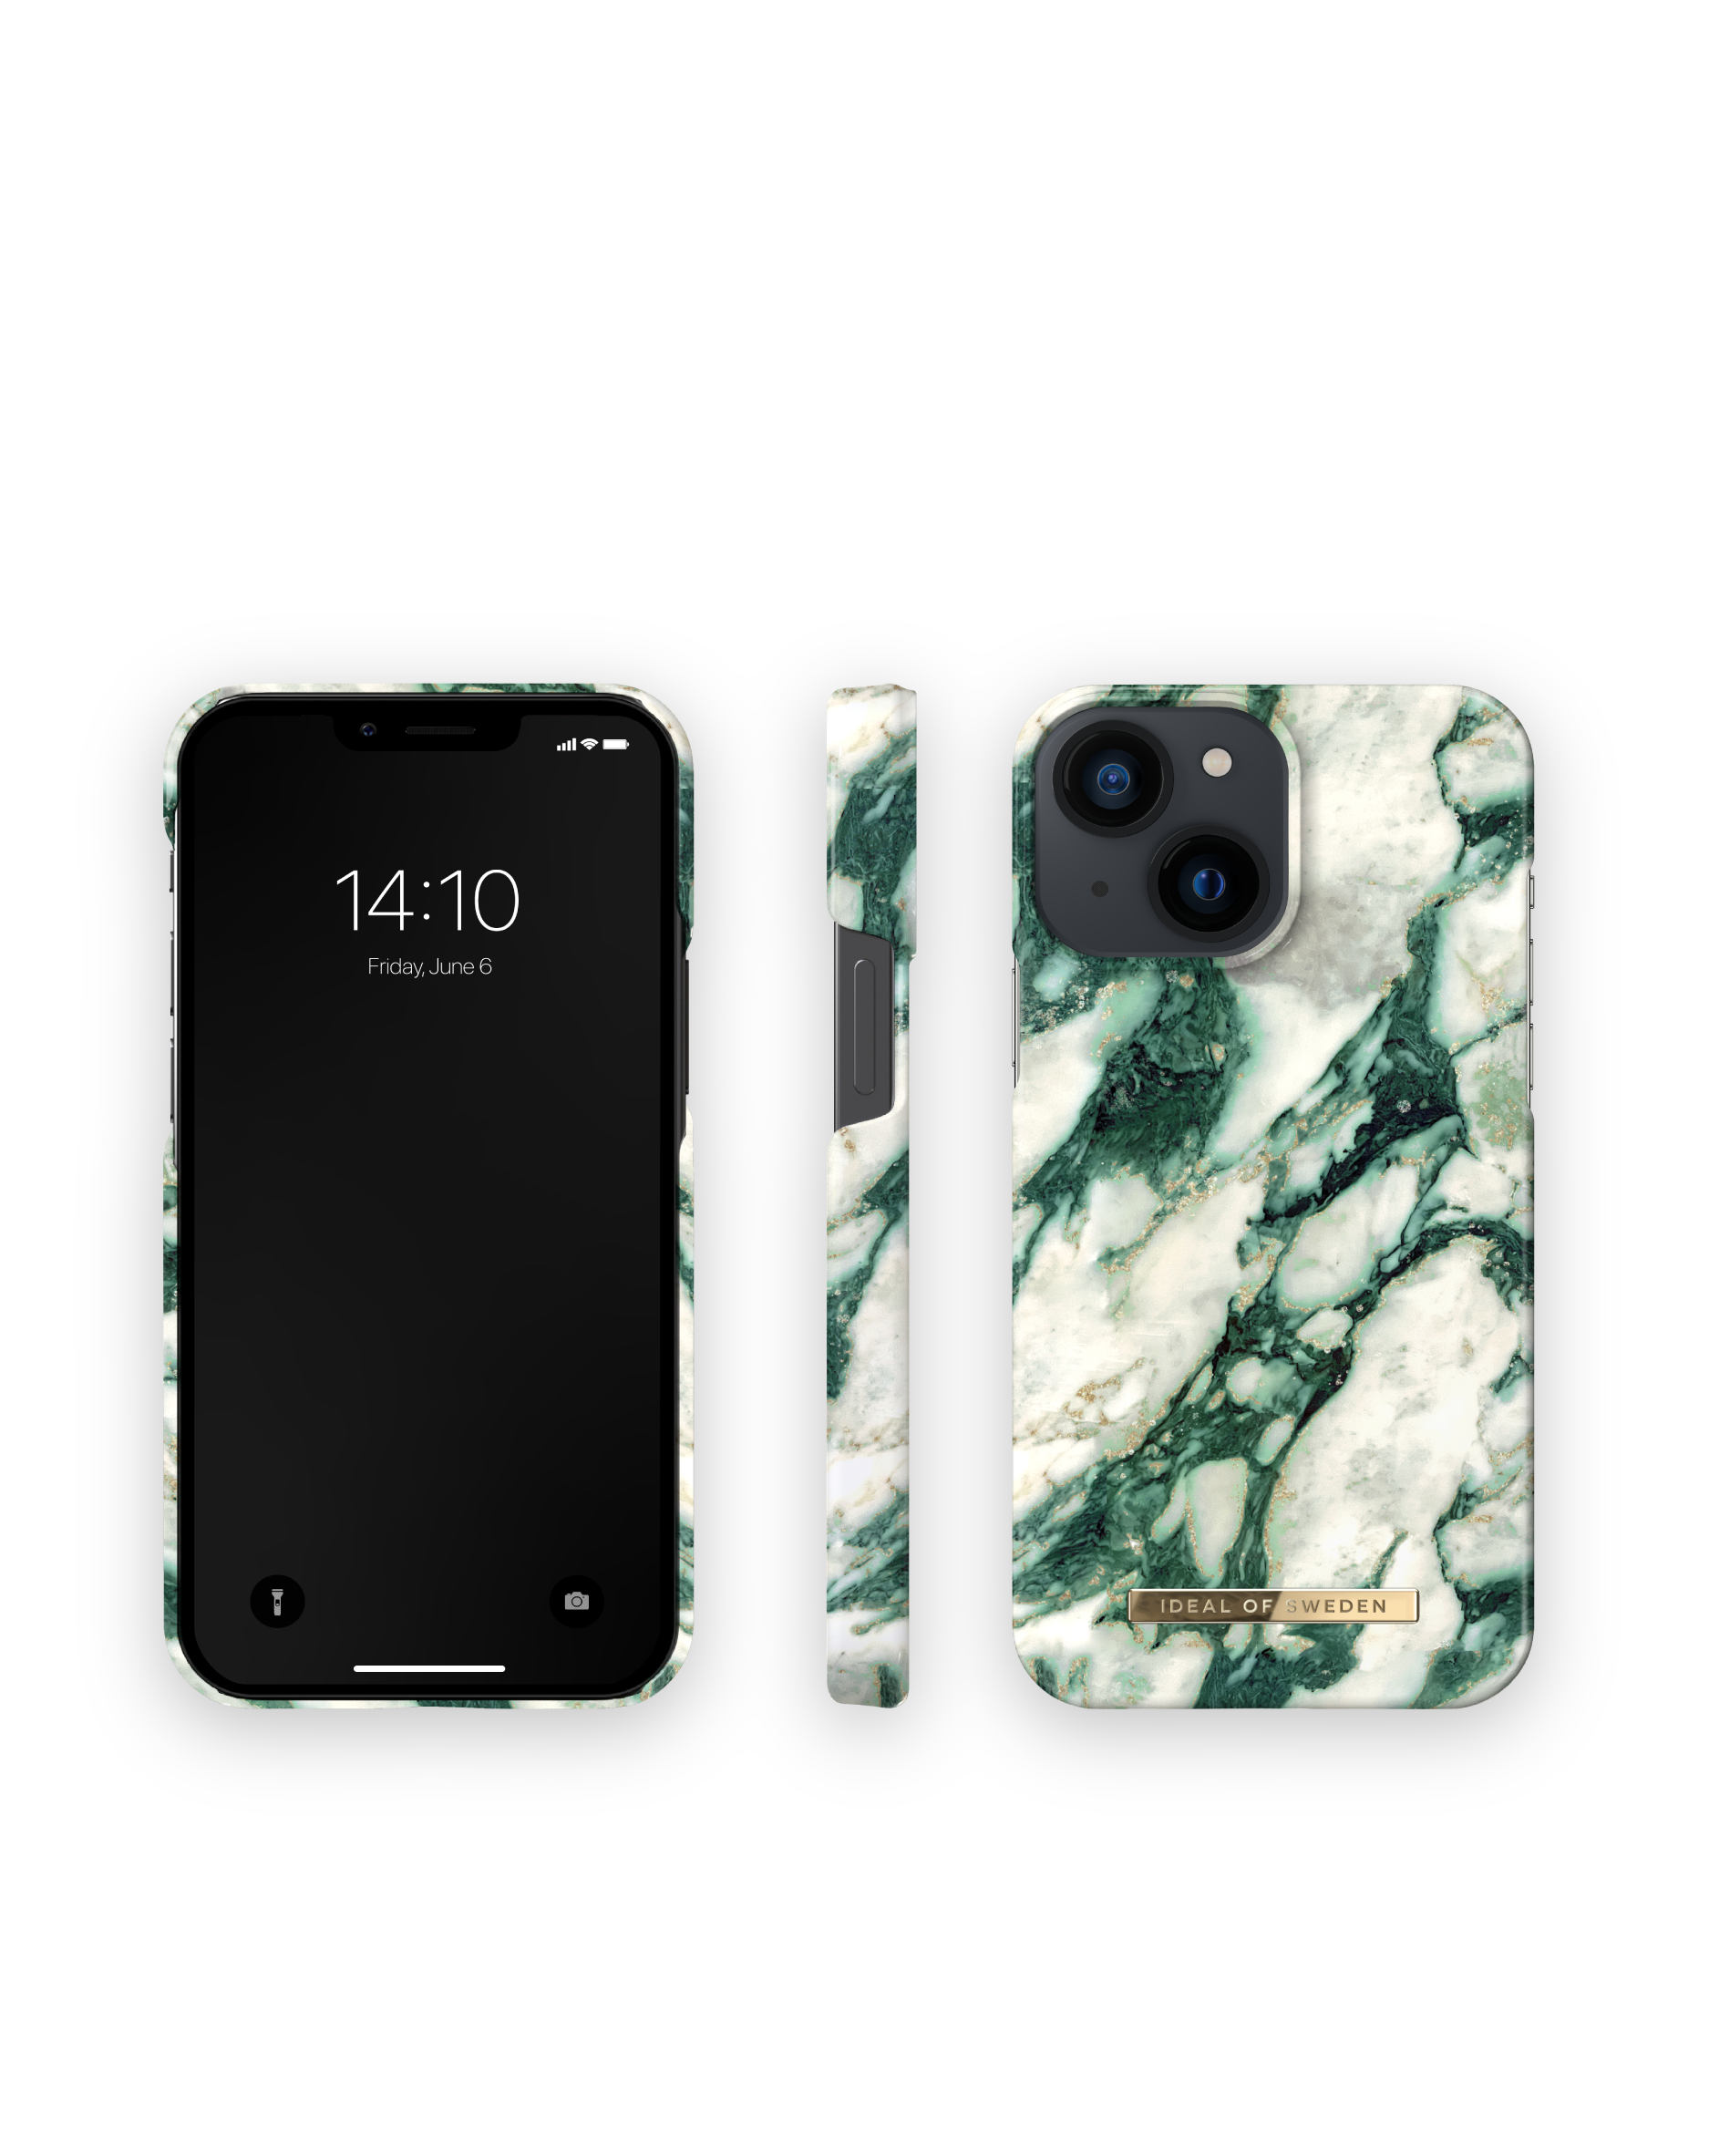 SWEDEN (Ltd) iPhone Mini, Lavender 13 IDNCSU22-I2154-4120, Umhängetasche, OF Apple, IDEAL